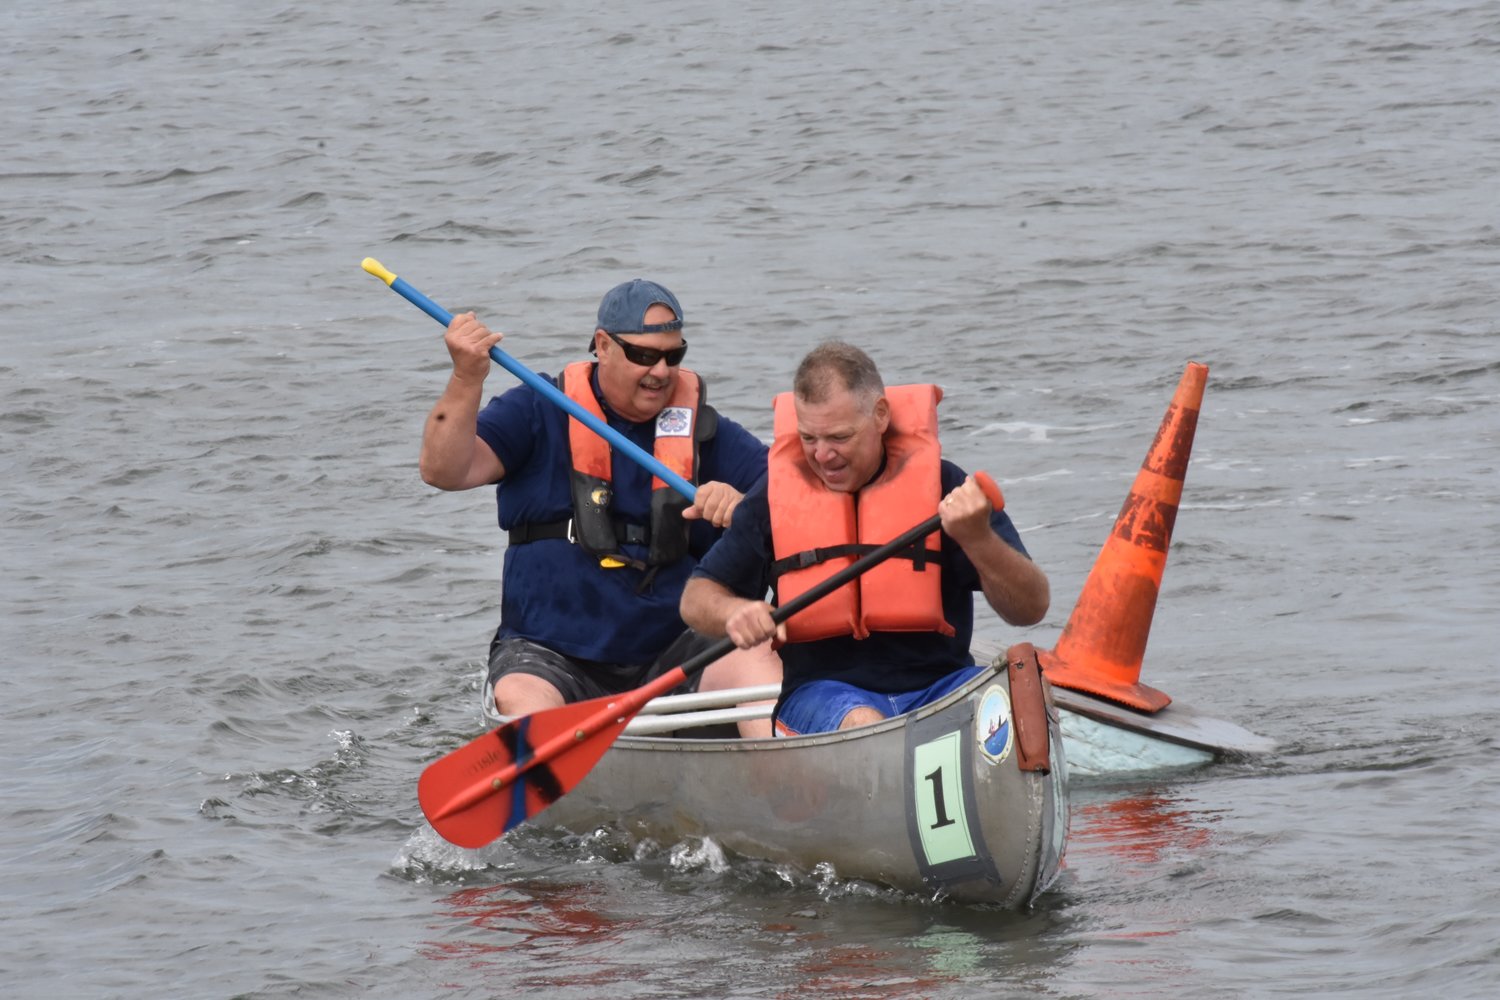 Mayor Robert Kennedy, left, and Legislator Steve Rhoads won a team gold medal in last year's Freeport Village Canoe Race.